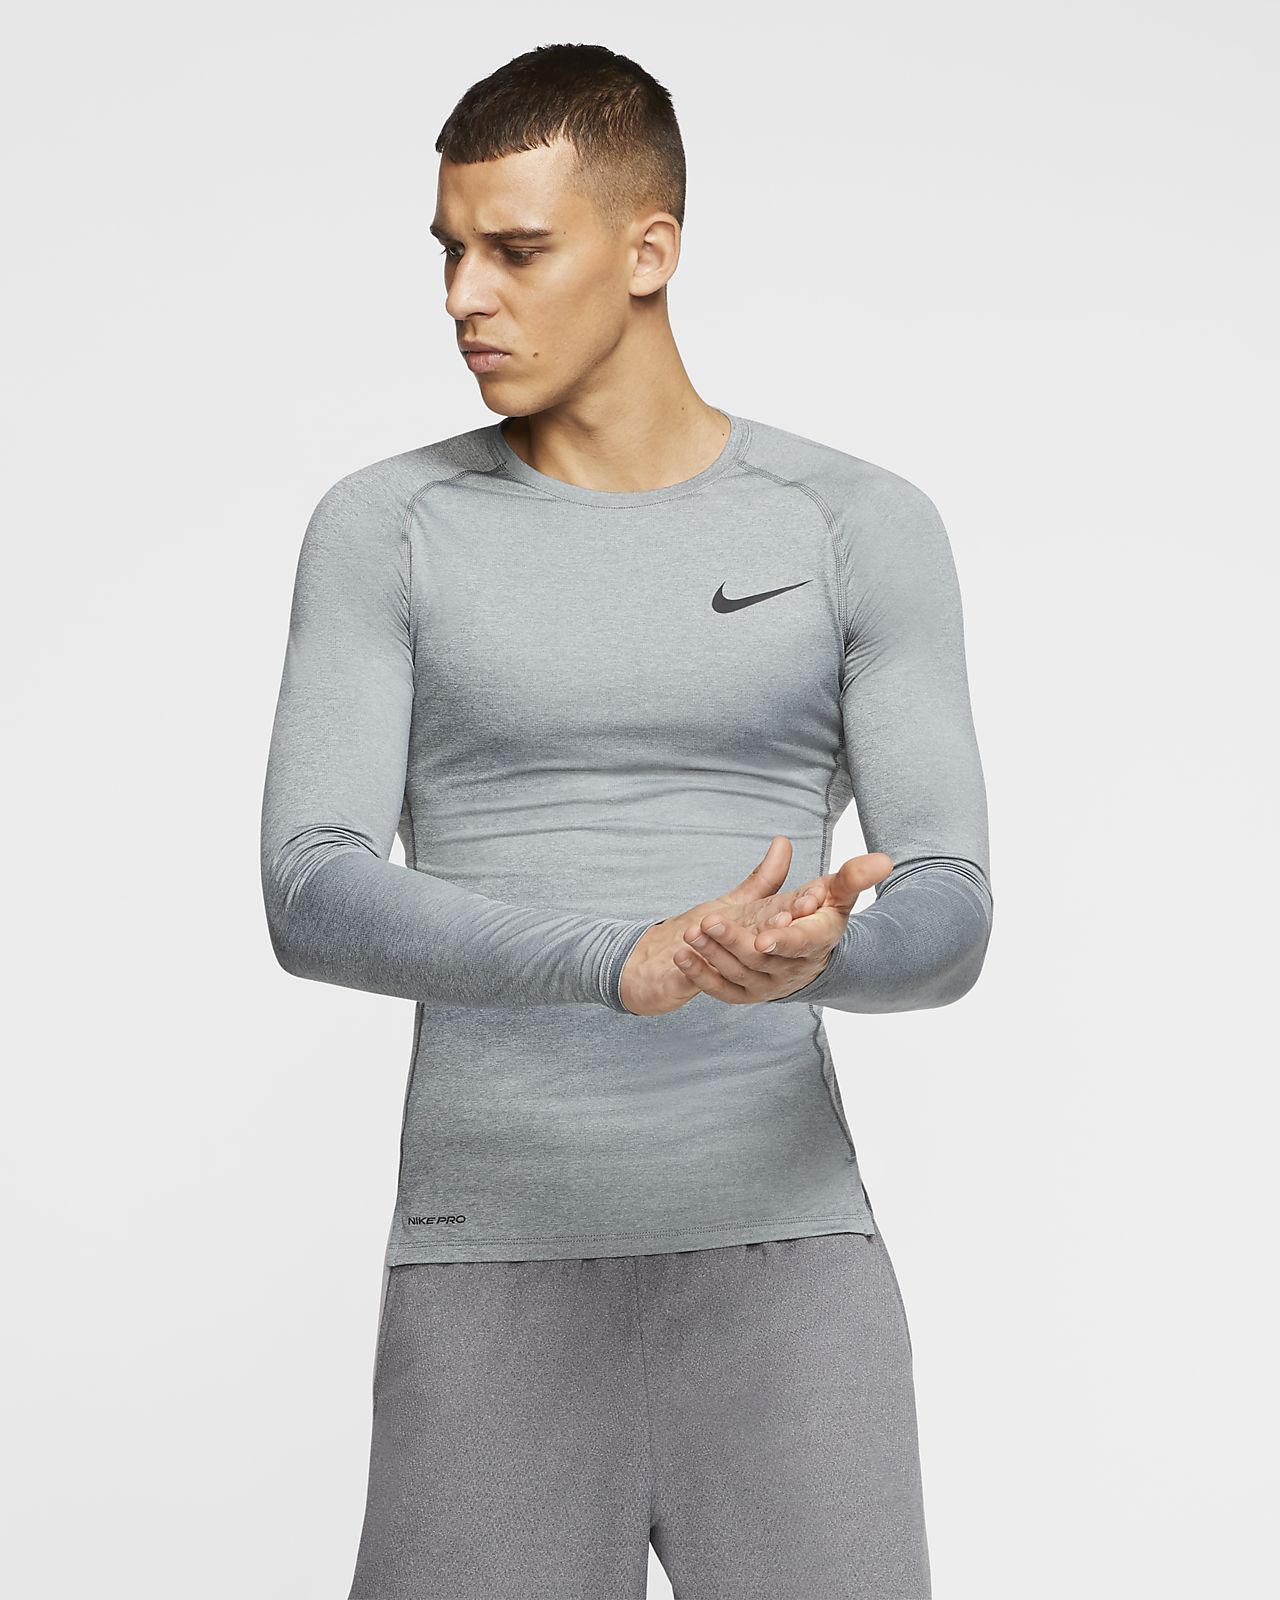 Nike Pro Men's Tight-Fit Long-Sleeve Top. Nike FI